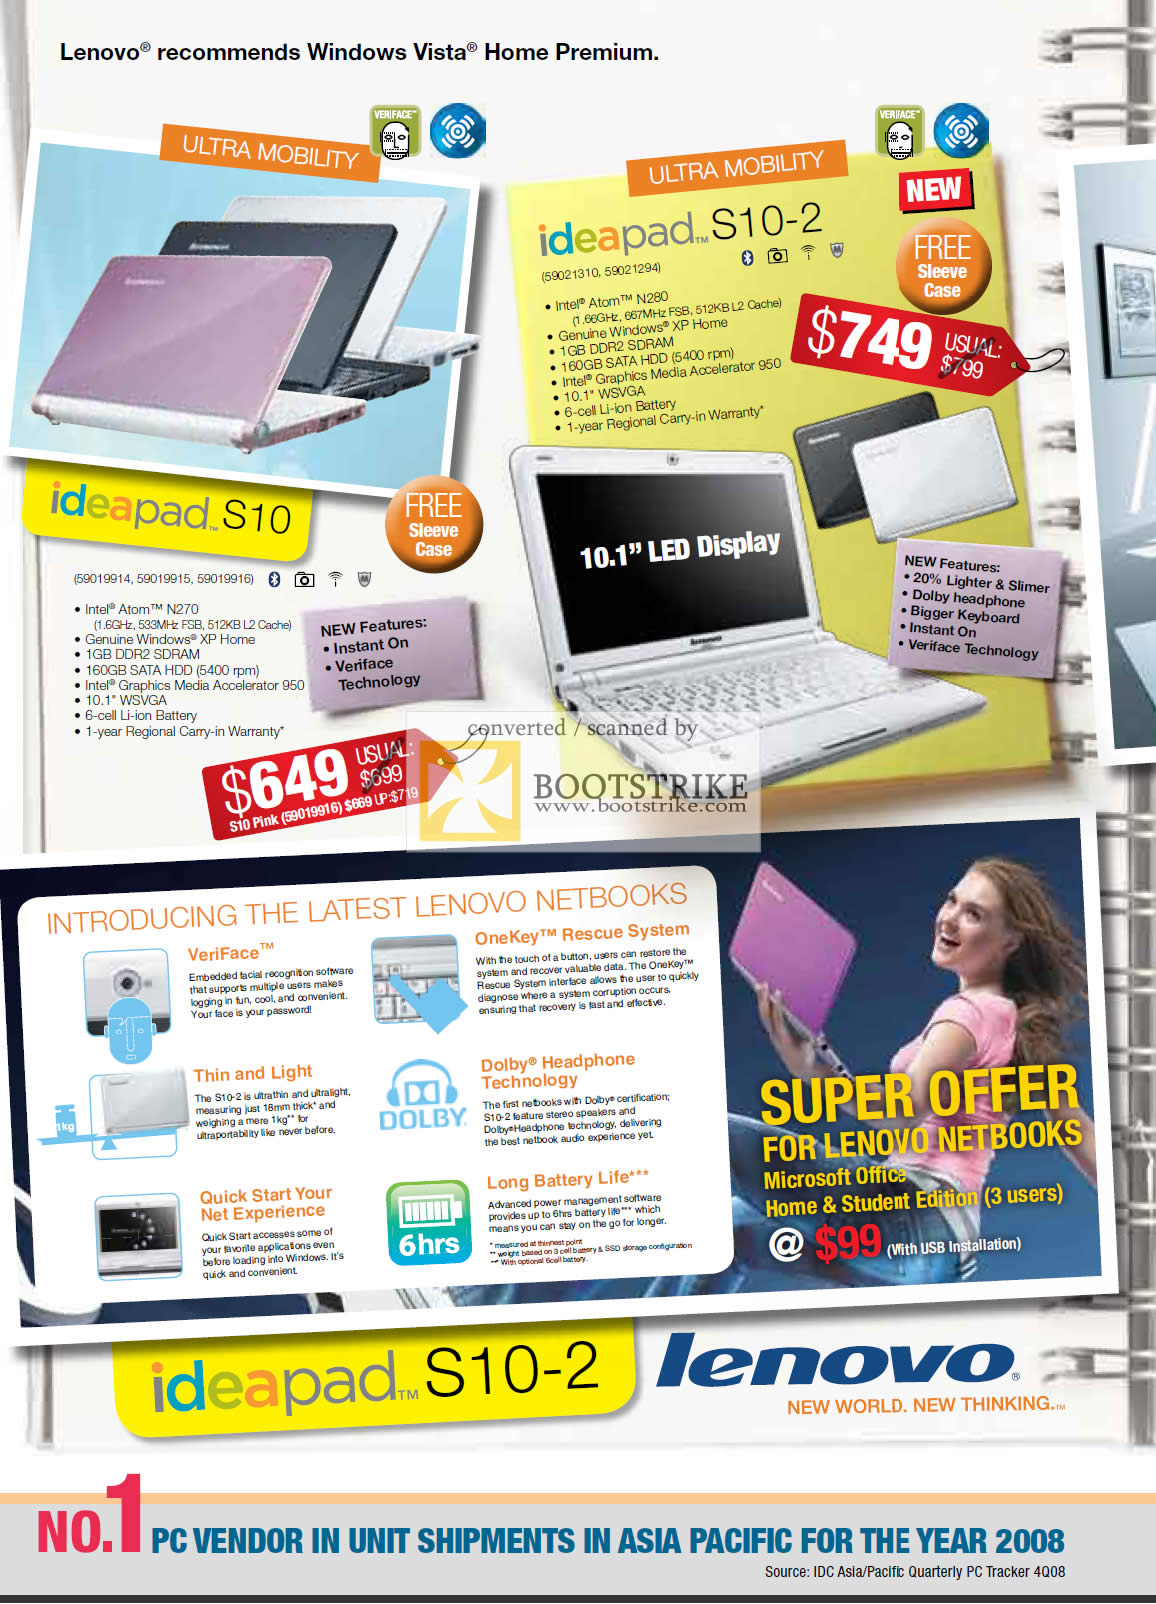 PC Show 2009 price list image brochure of Lenovo Ideapad S10 Netbooks